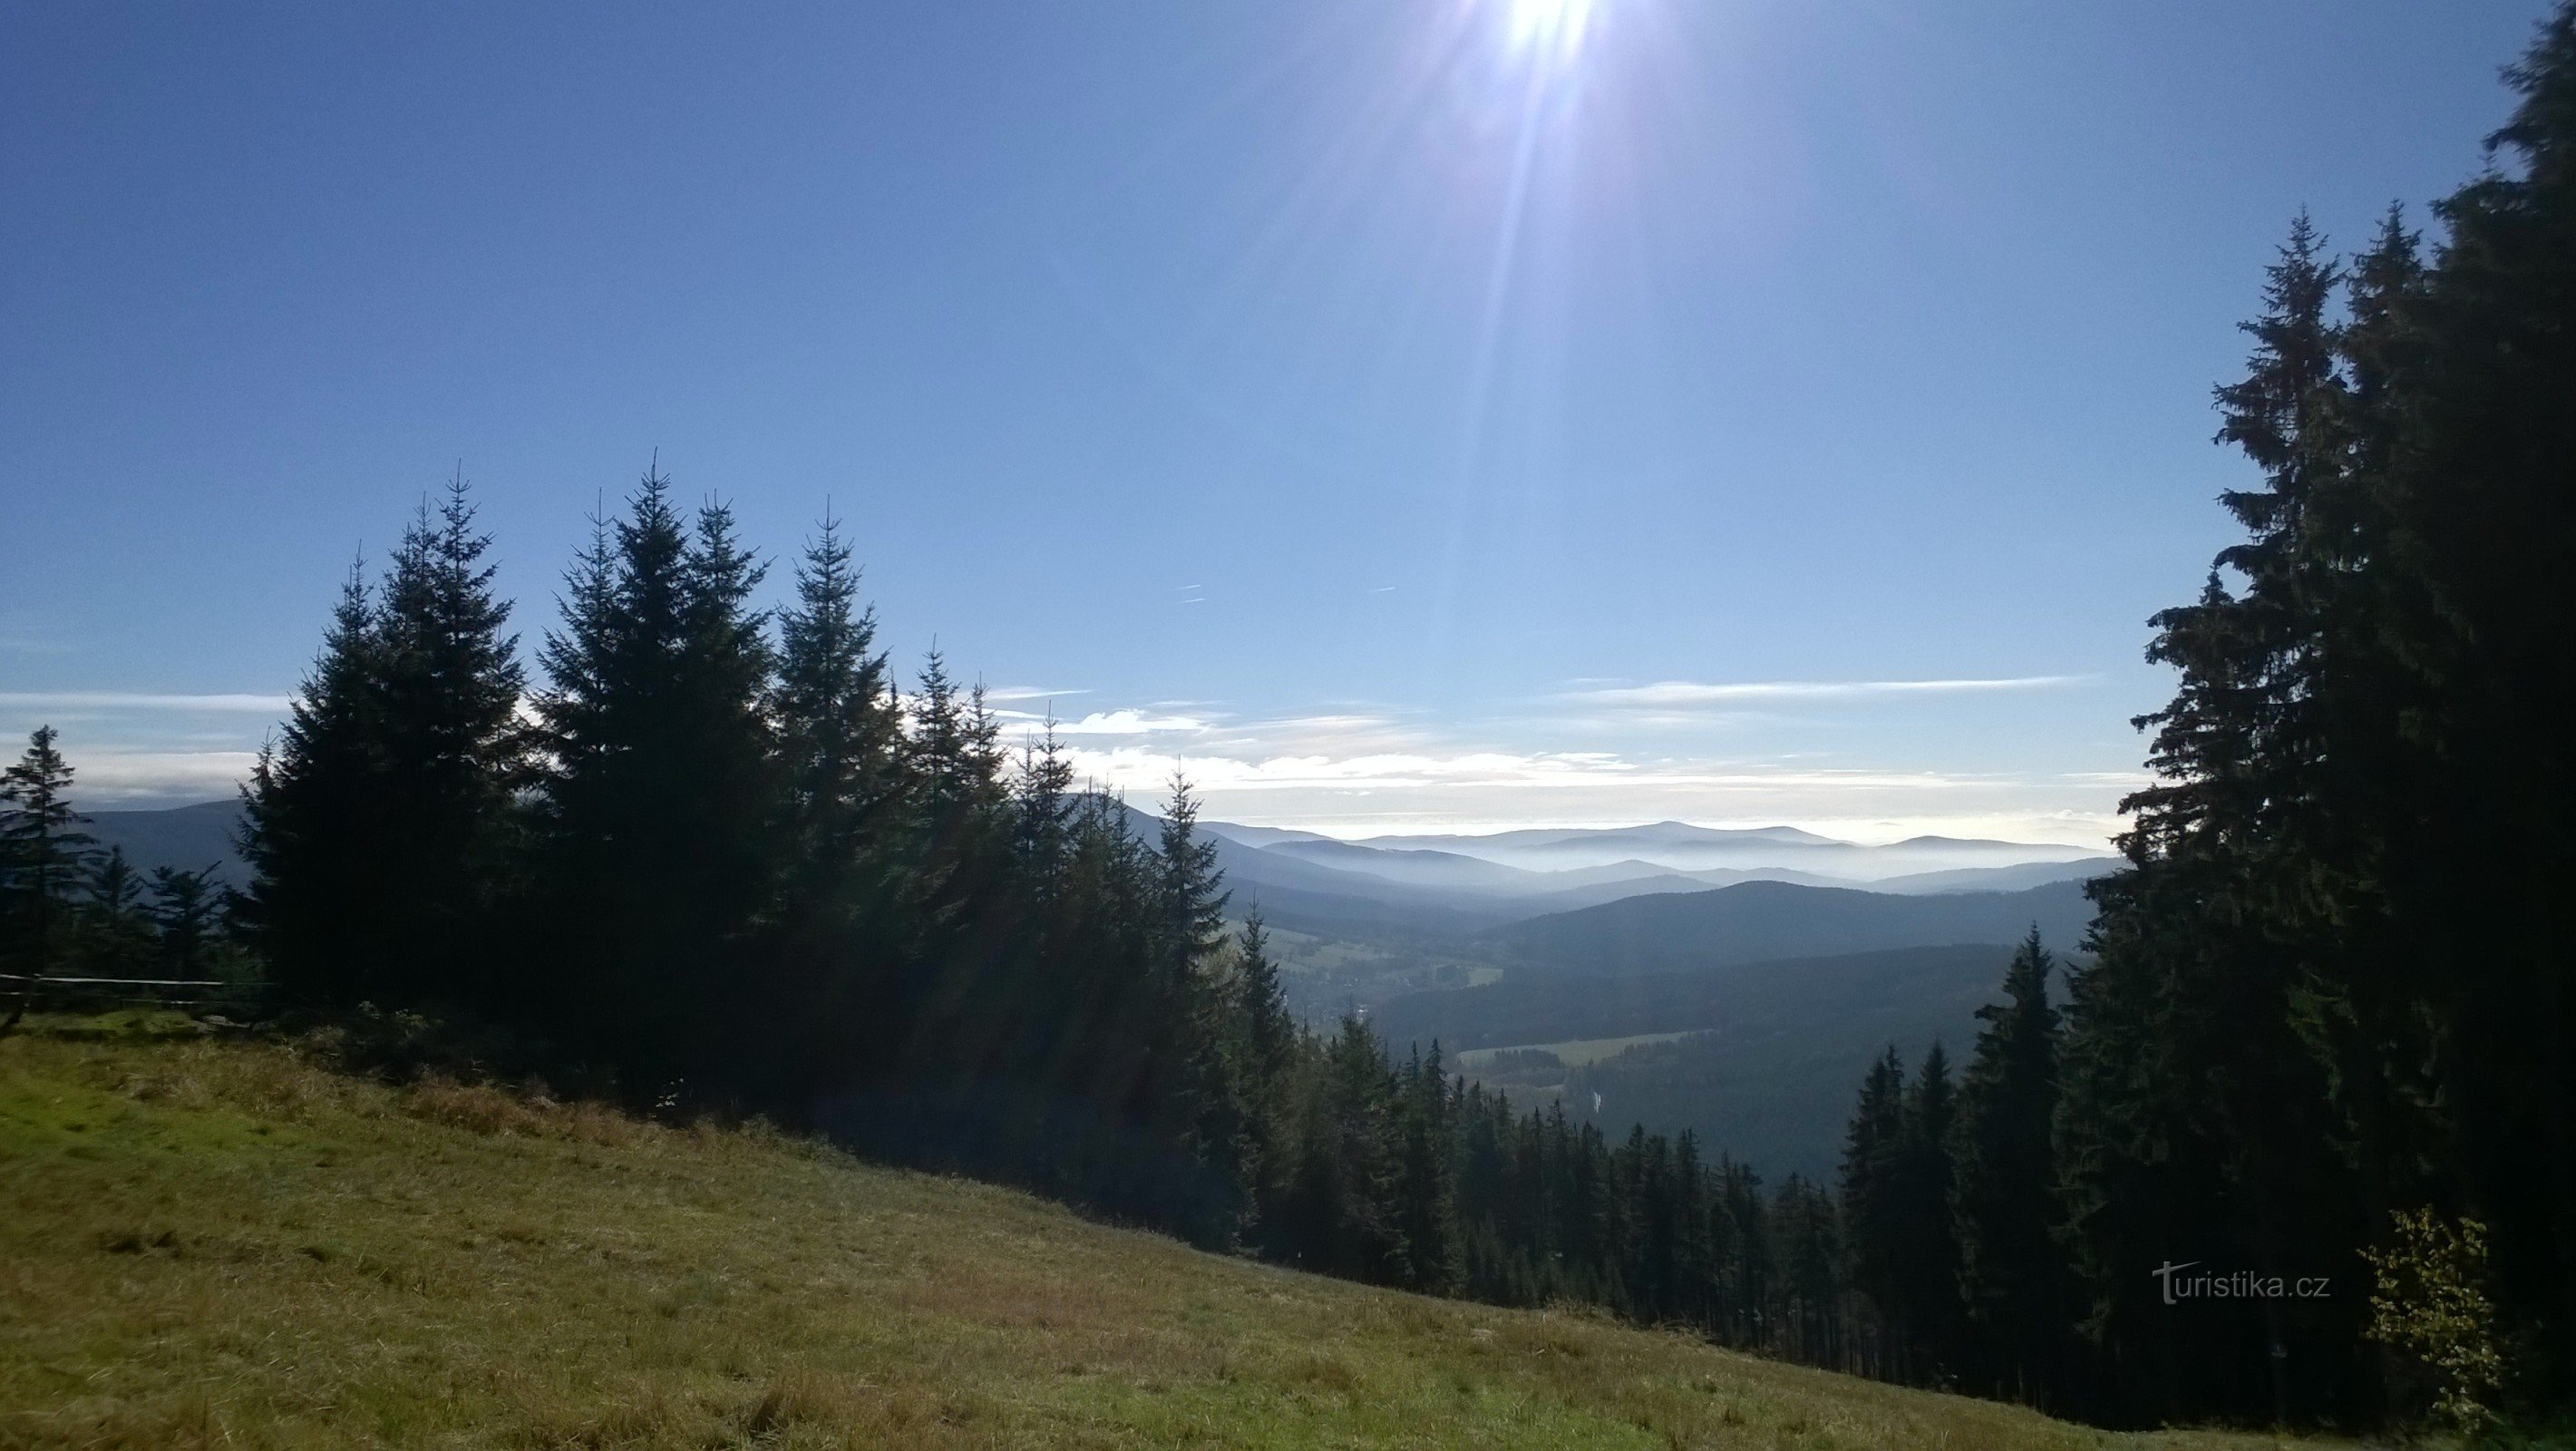 below the peak of Špičák.